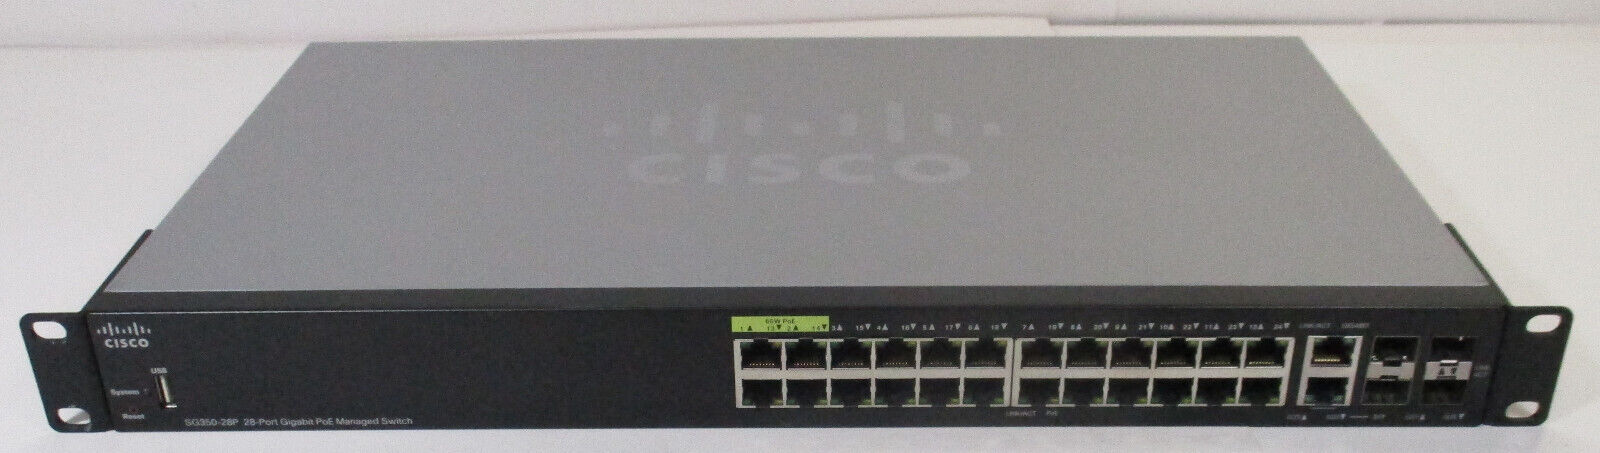 Cisco SG350-28P Gigabit 28-Port PoE Managed Switch